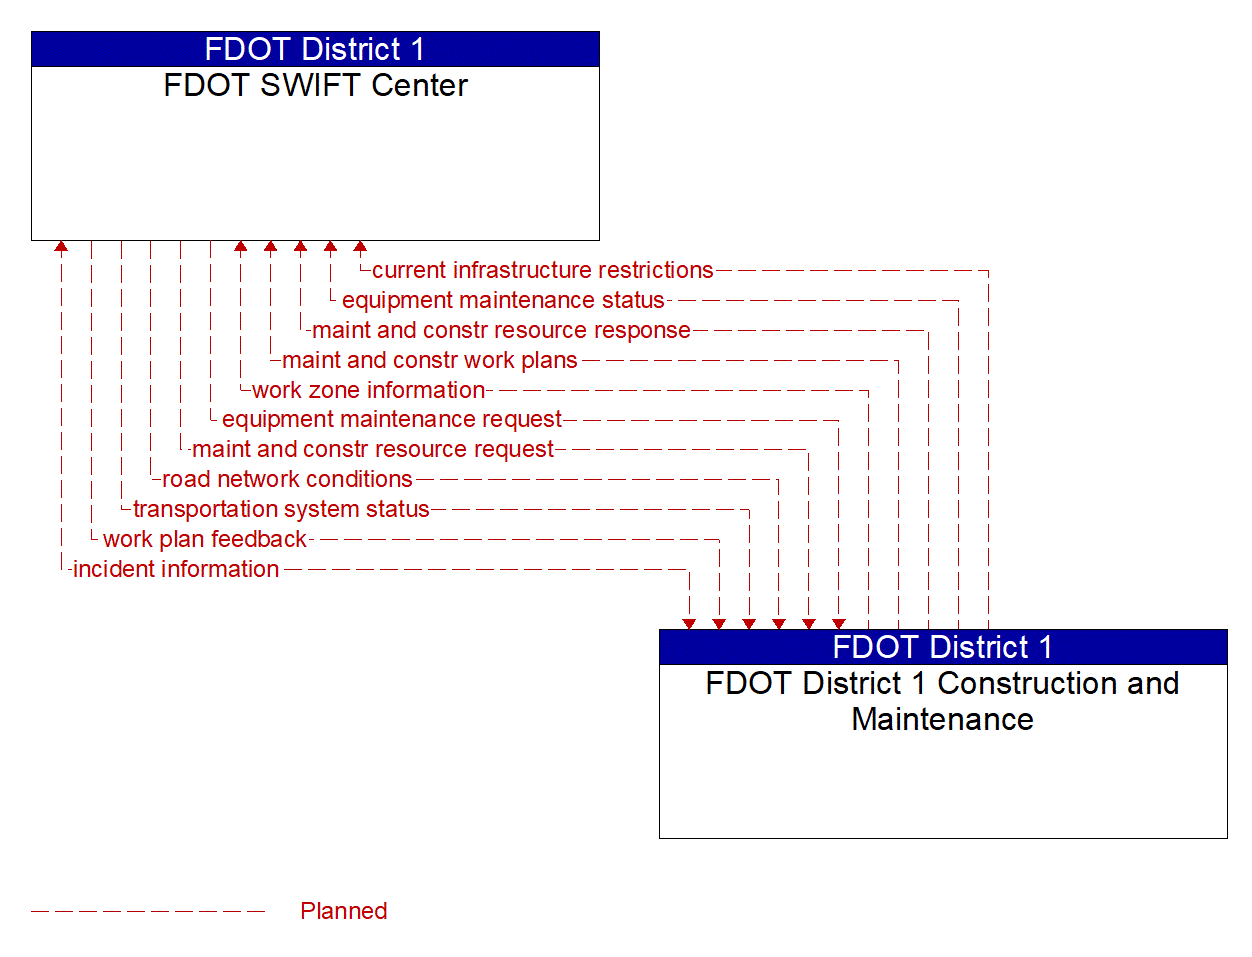 Architecture Flow Diagram: FDOT District 1 Construction and Maintenance <--> FDOT SWIFT Center